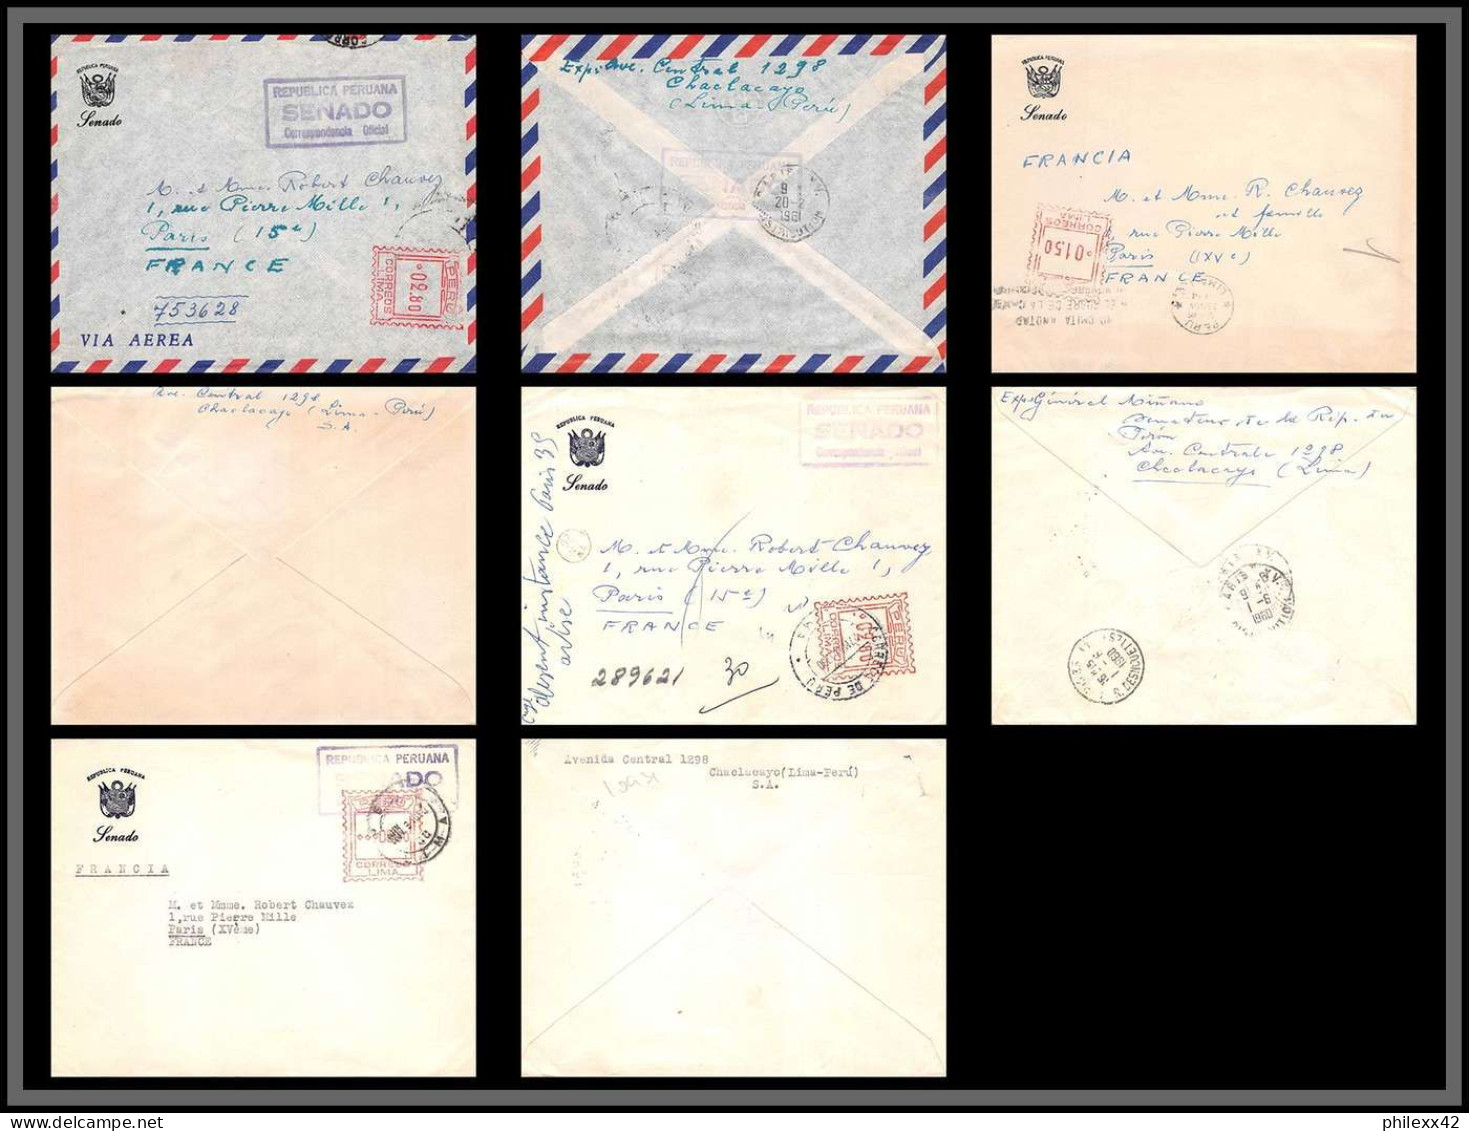 10931 SENADO CORRESPONDENCIA OFICIAL 1960 Lettre Cover Perou Peru  - Perù